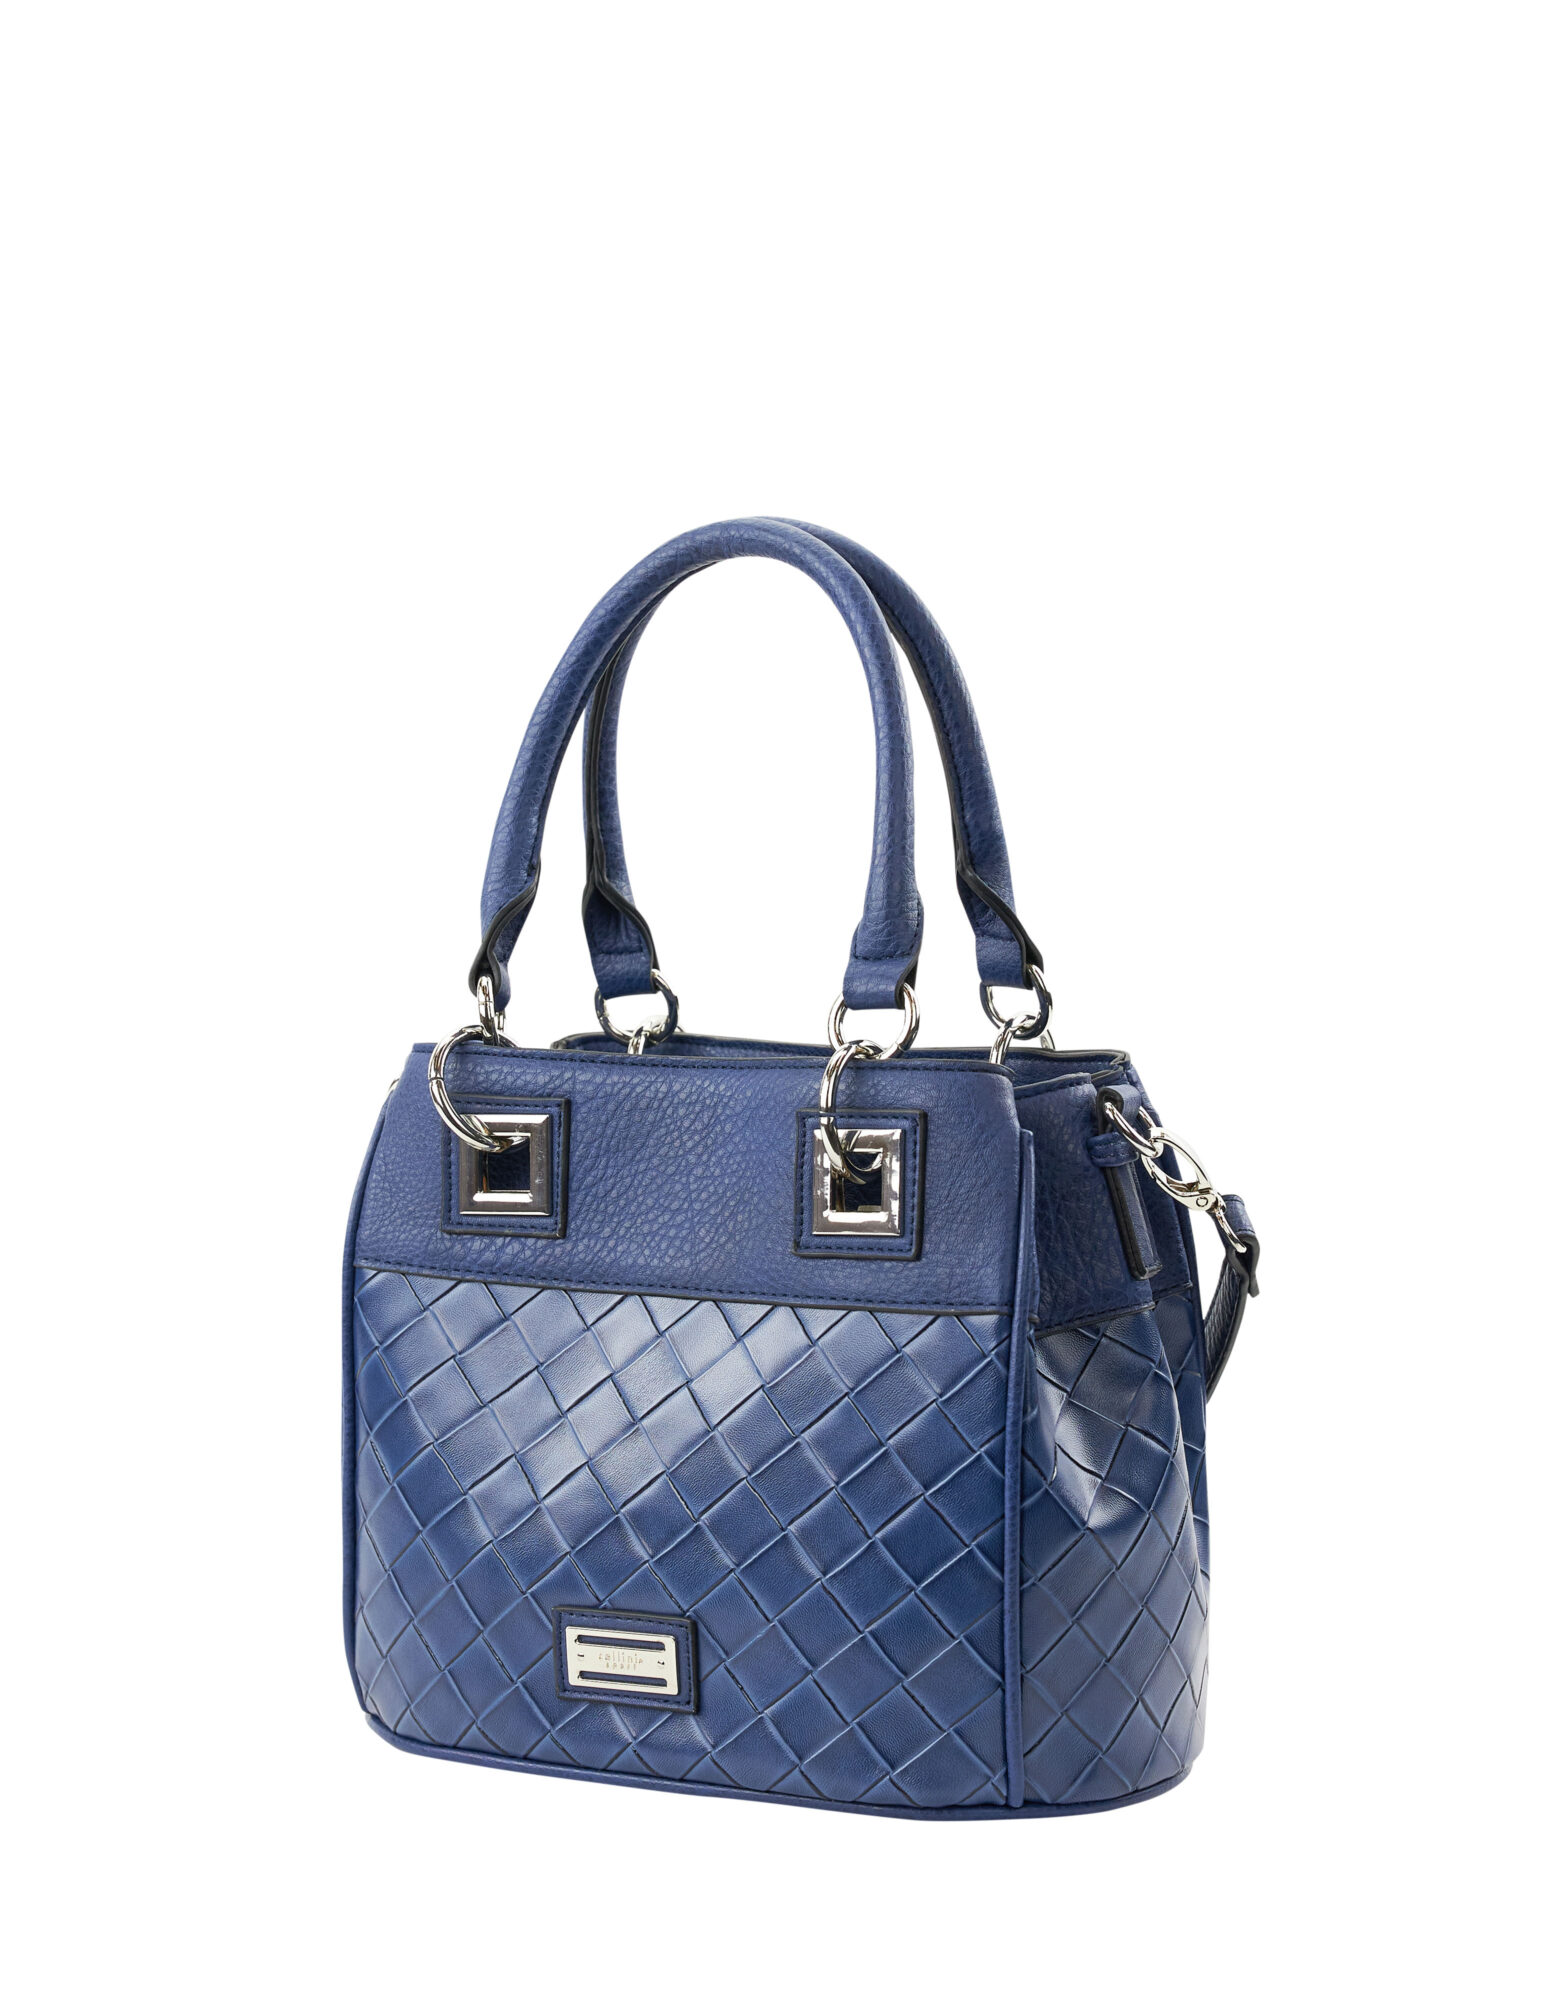 Handbags - Exclusive Collection of Handbags for Women